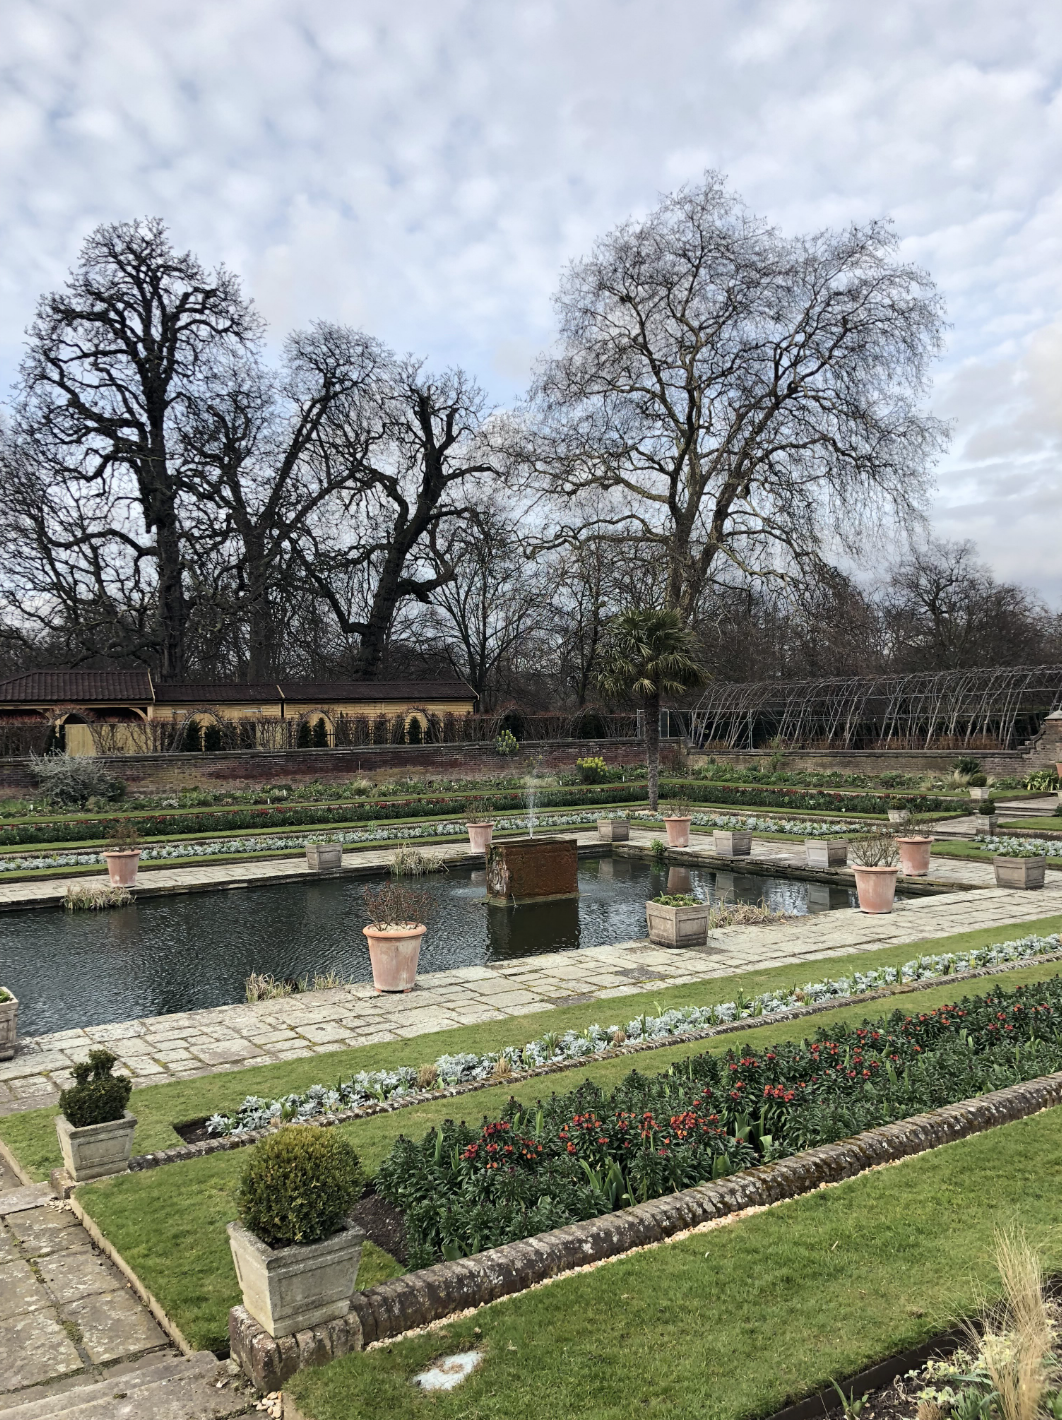 The sunken garden at Kensington Palace